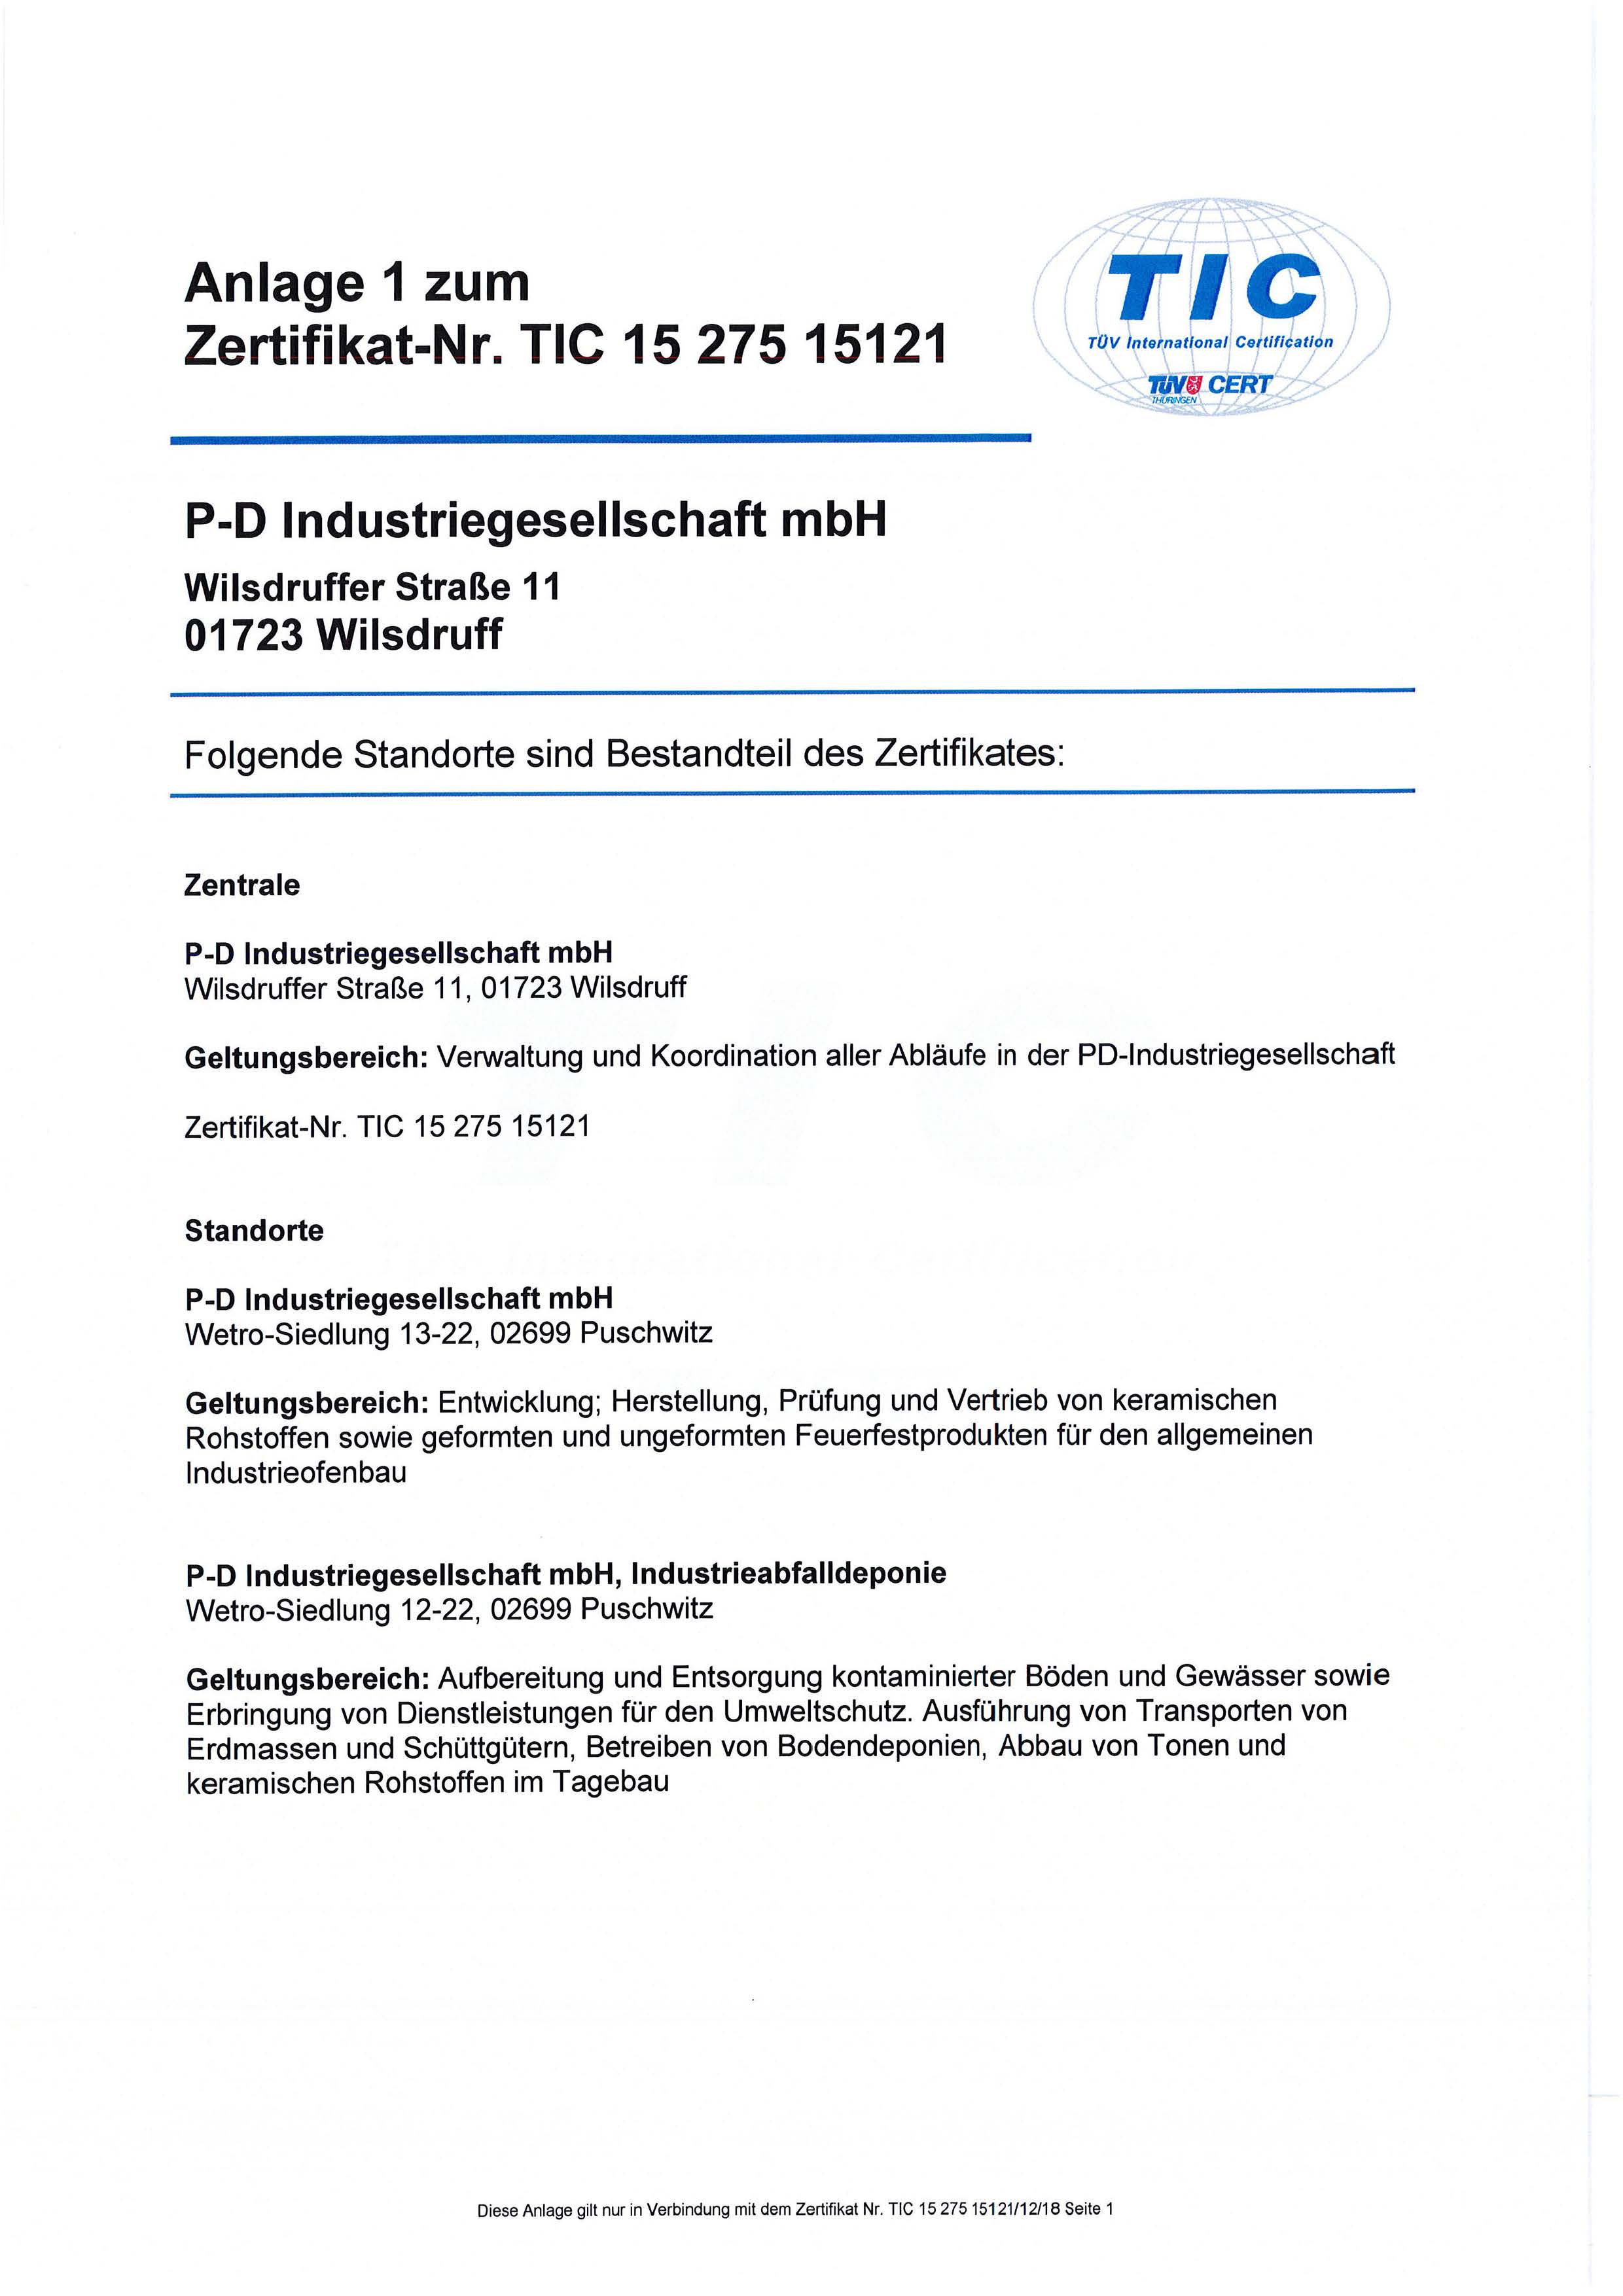 P-D Industriegesellschaft mbH · DIN EN ISO 50001:2011 (příloha)